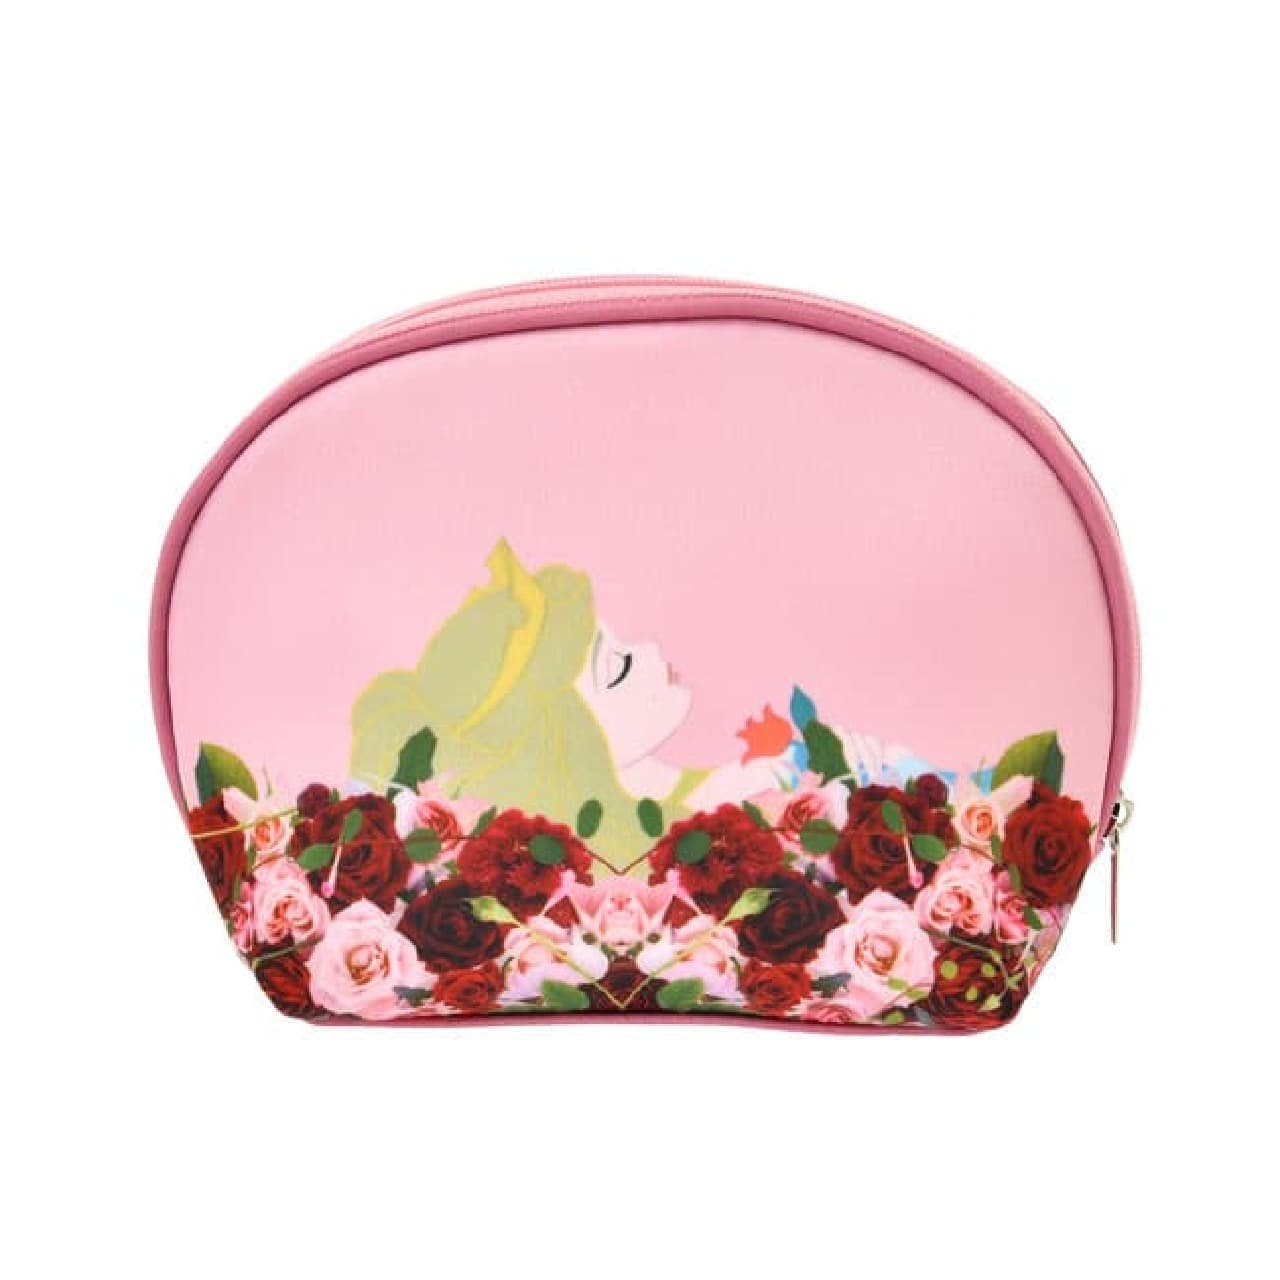 Disney Store x Nicolai Bergman Flowers & Design -- Elegant collection of Cinderella and Princess Aurora